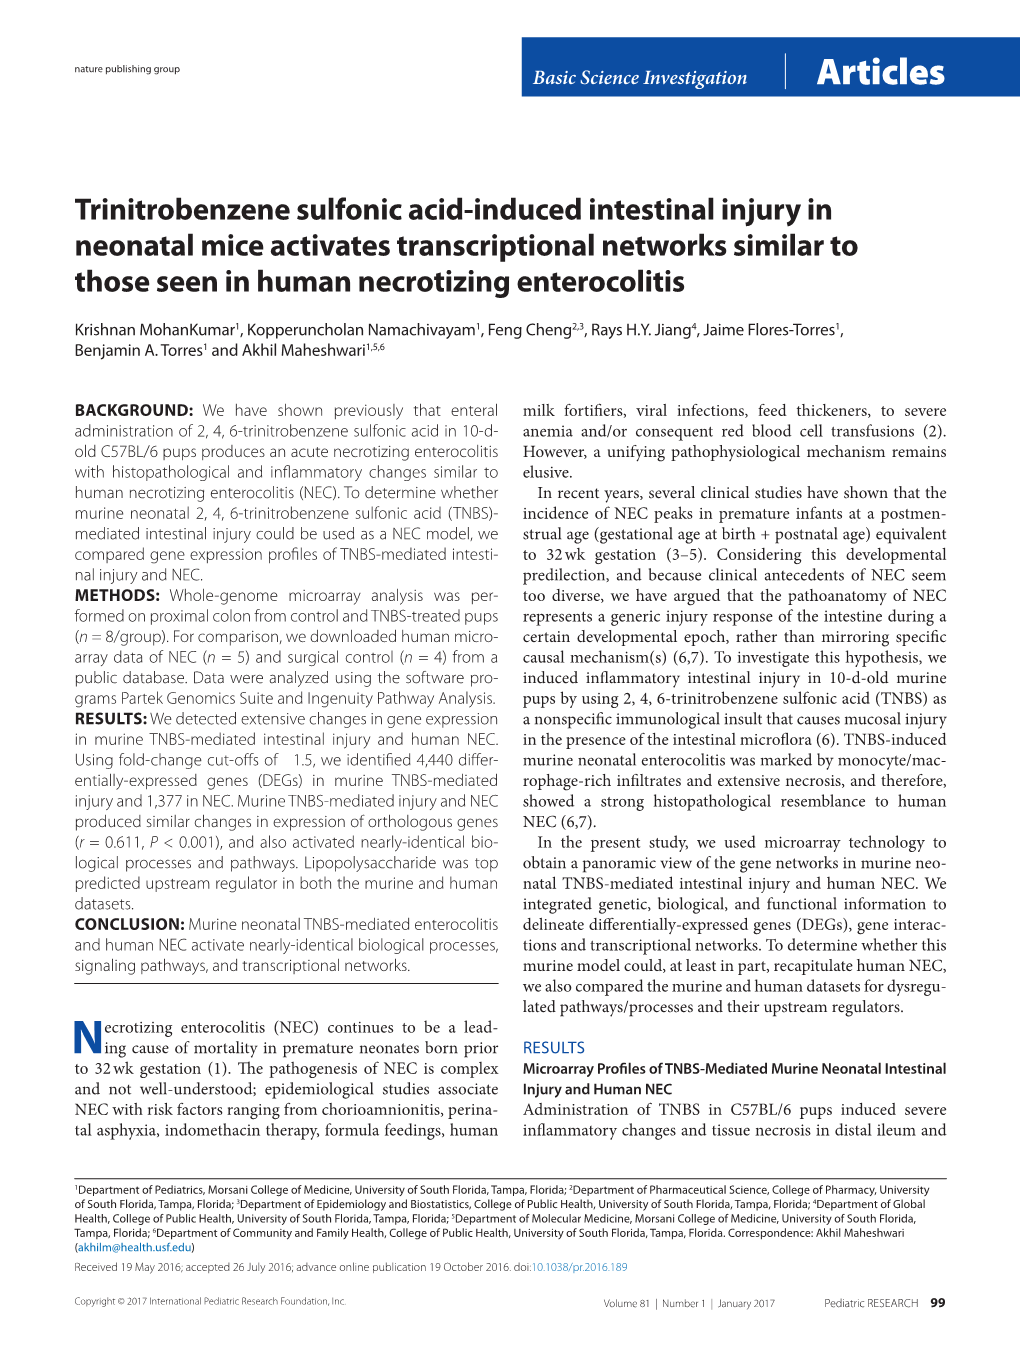 Trinitrobenzene Sulfonic Acid-Induced Intestinal Injury in Neonatal Mice Activates Transcriptional Networks Similar to Those Seen in Human Necrotizing Enterocolitis